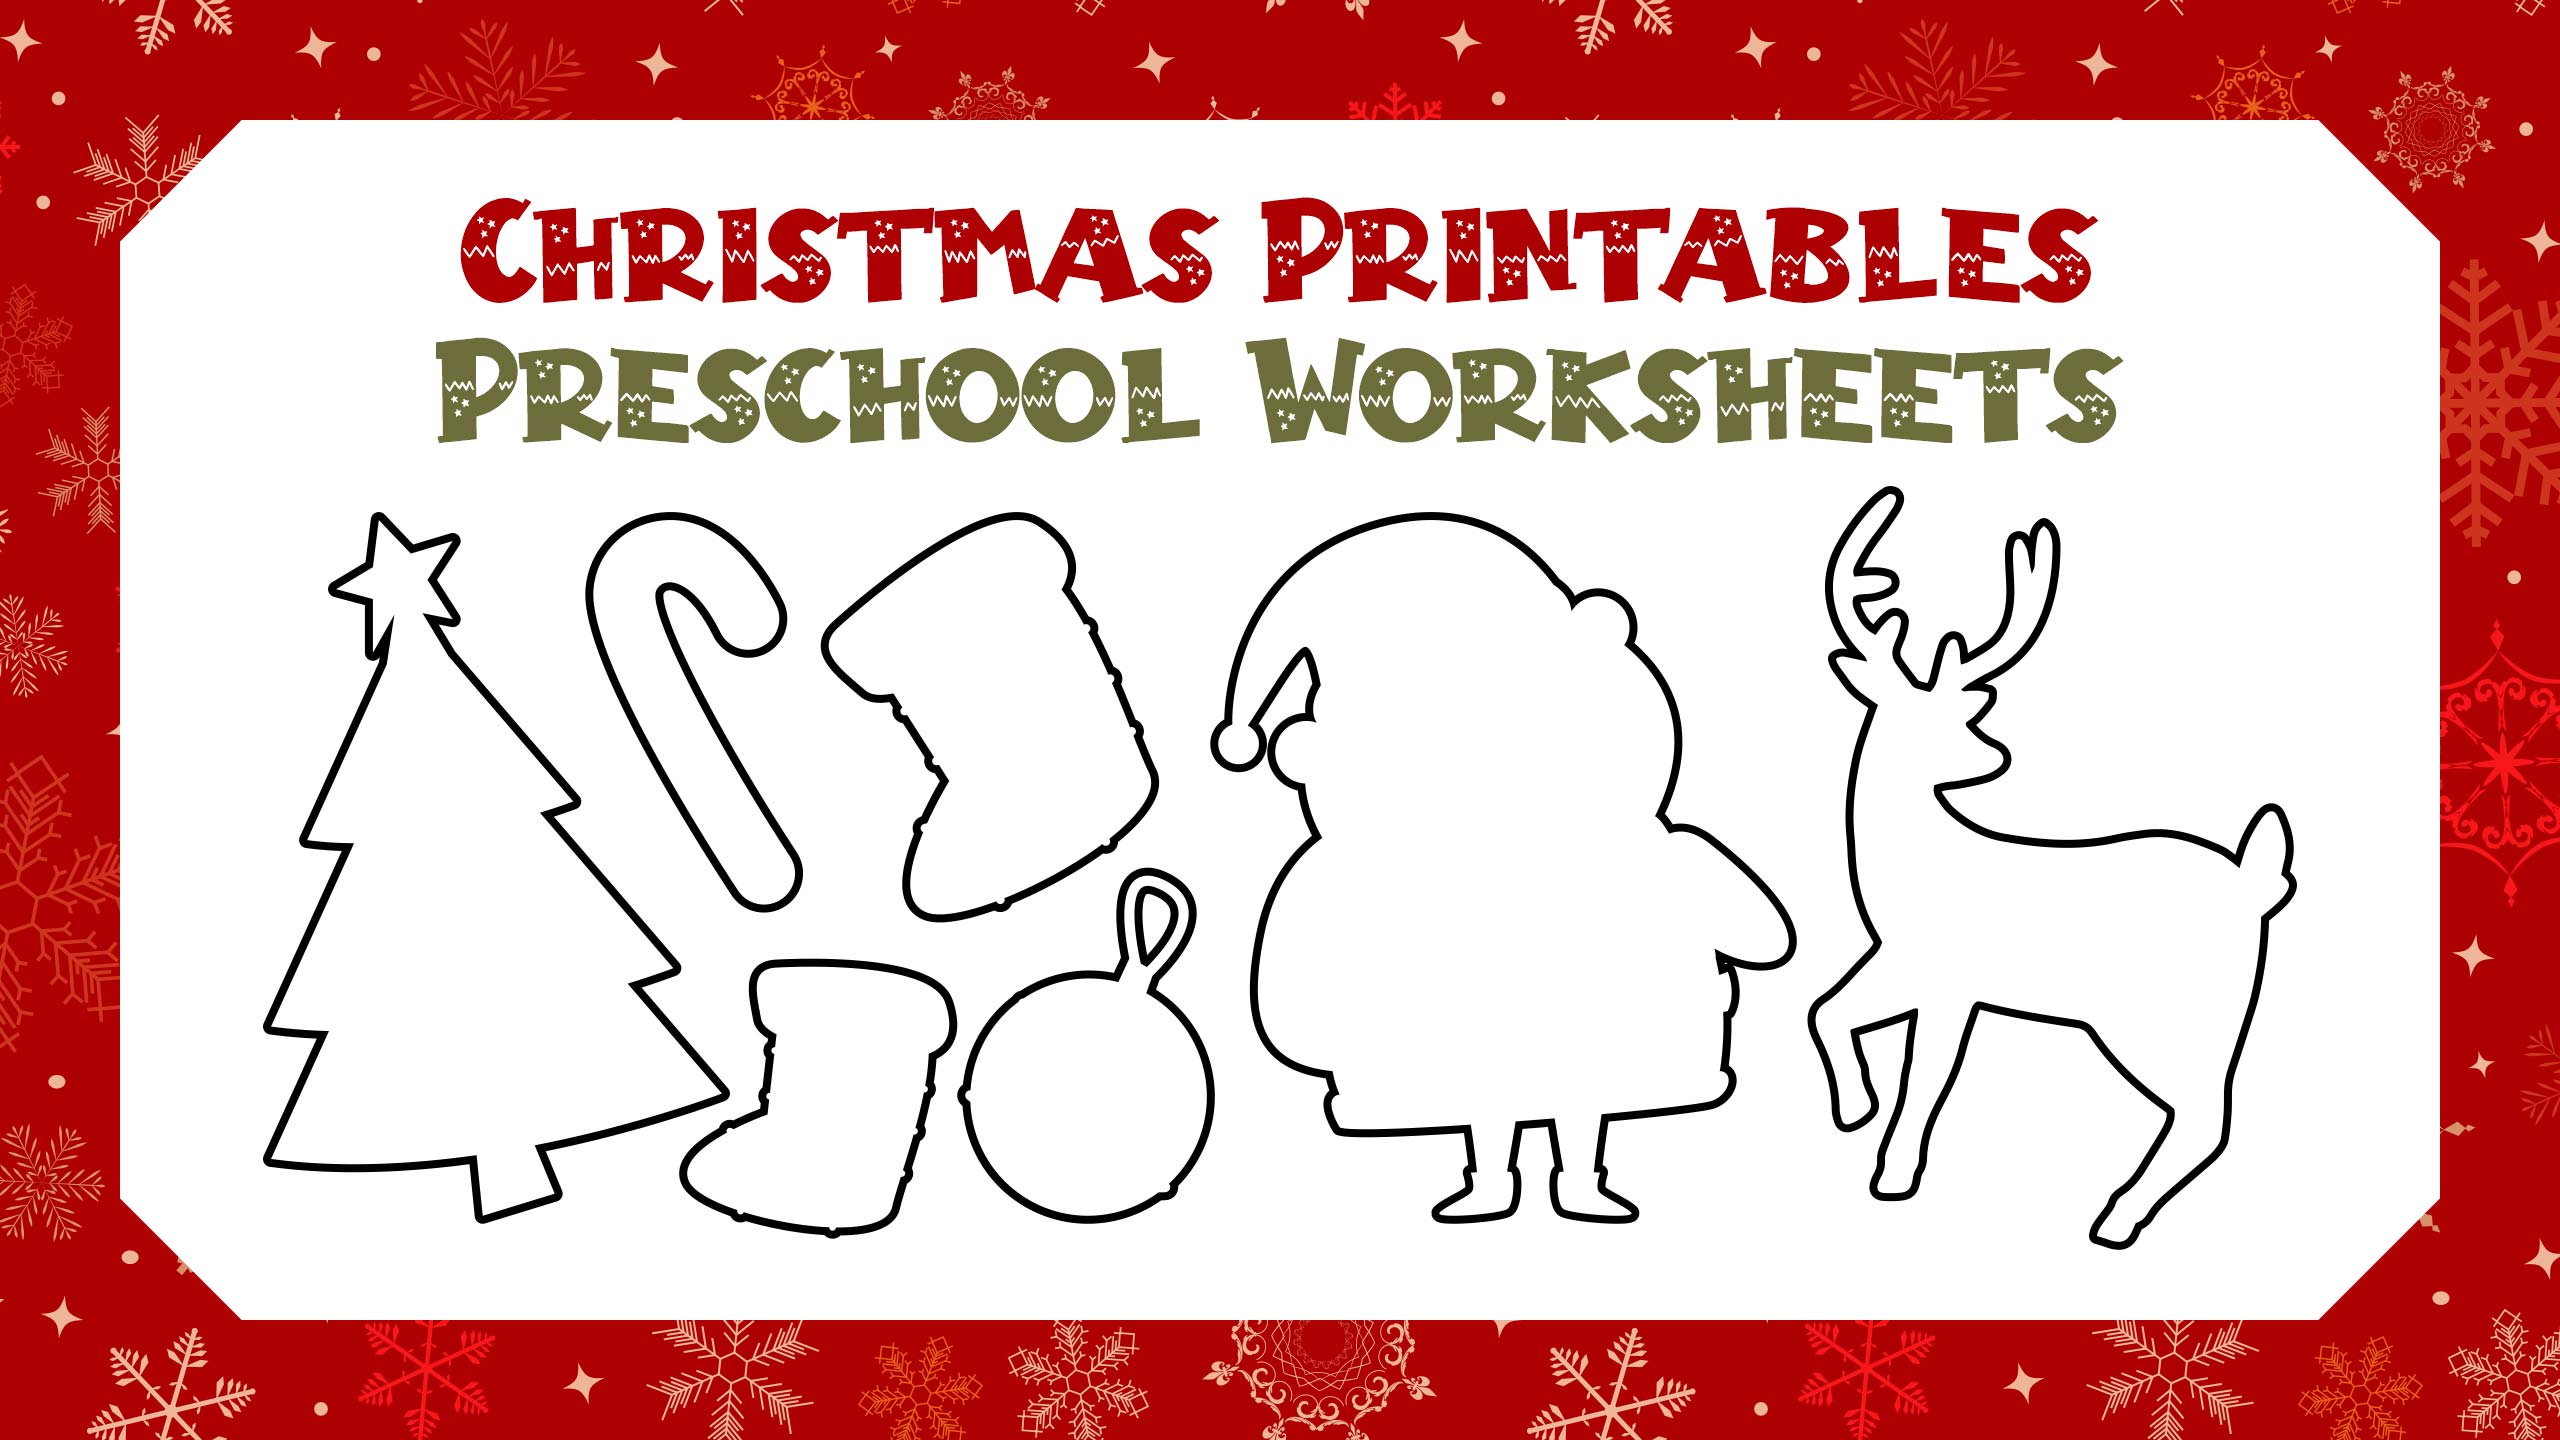 Christmas Printables And Preschool Worksheets